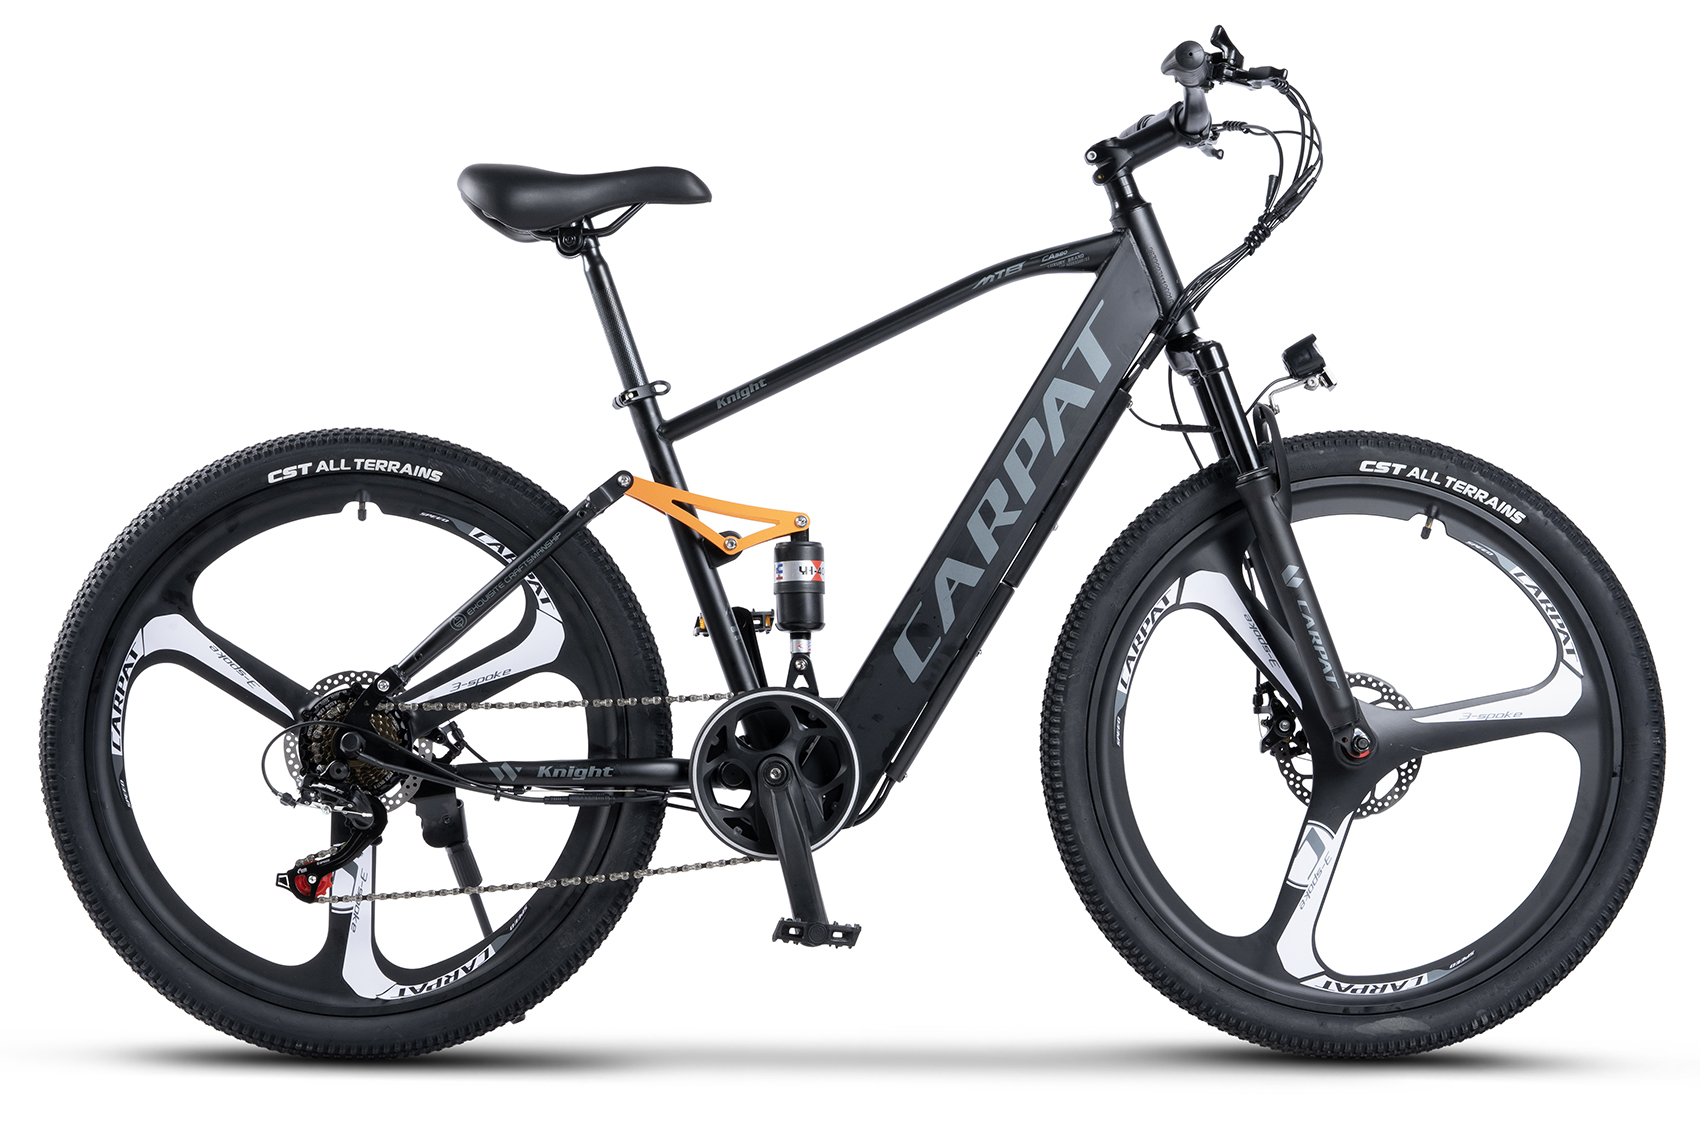 PROMO BICICLETE - Bicicleta Electrica (E-Bike) MTB Carpat Knight C26519E 26", Negru/Gri, https:carpatsport.ro